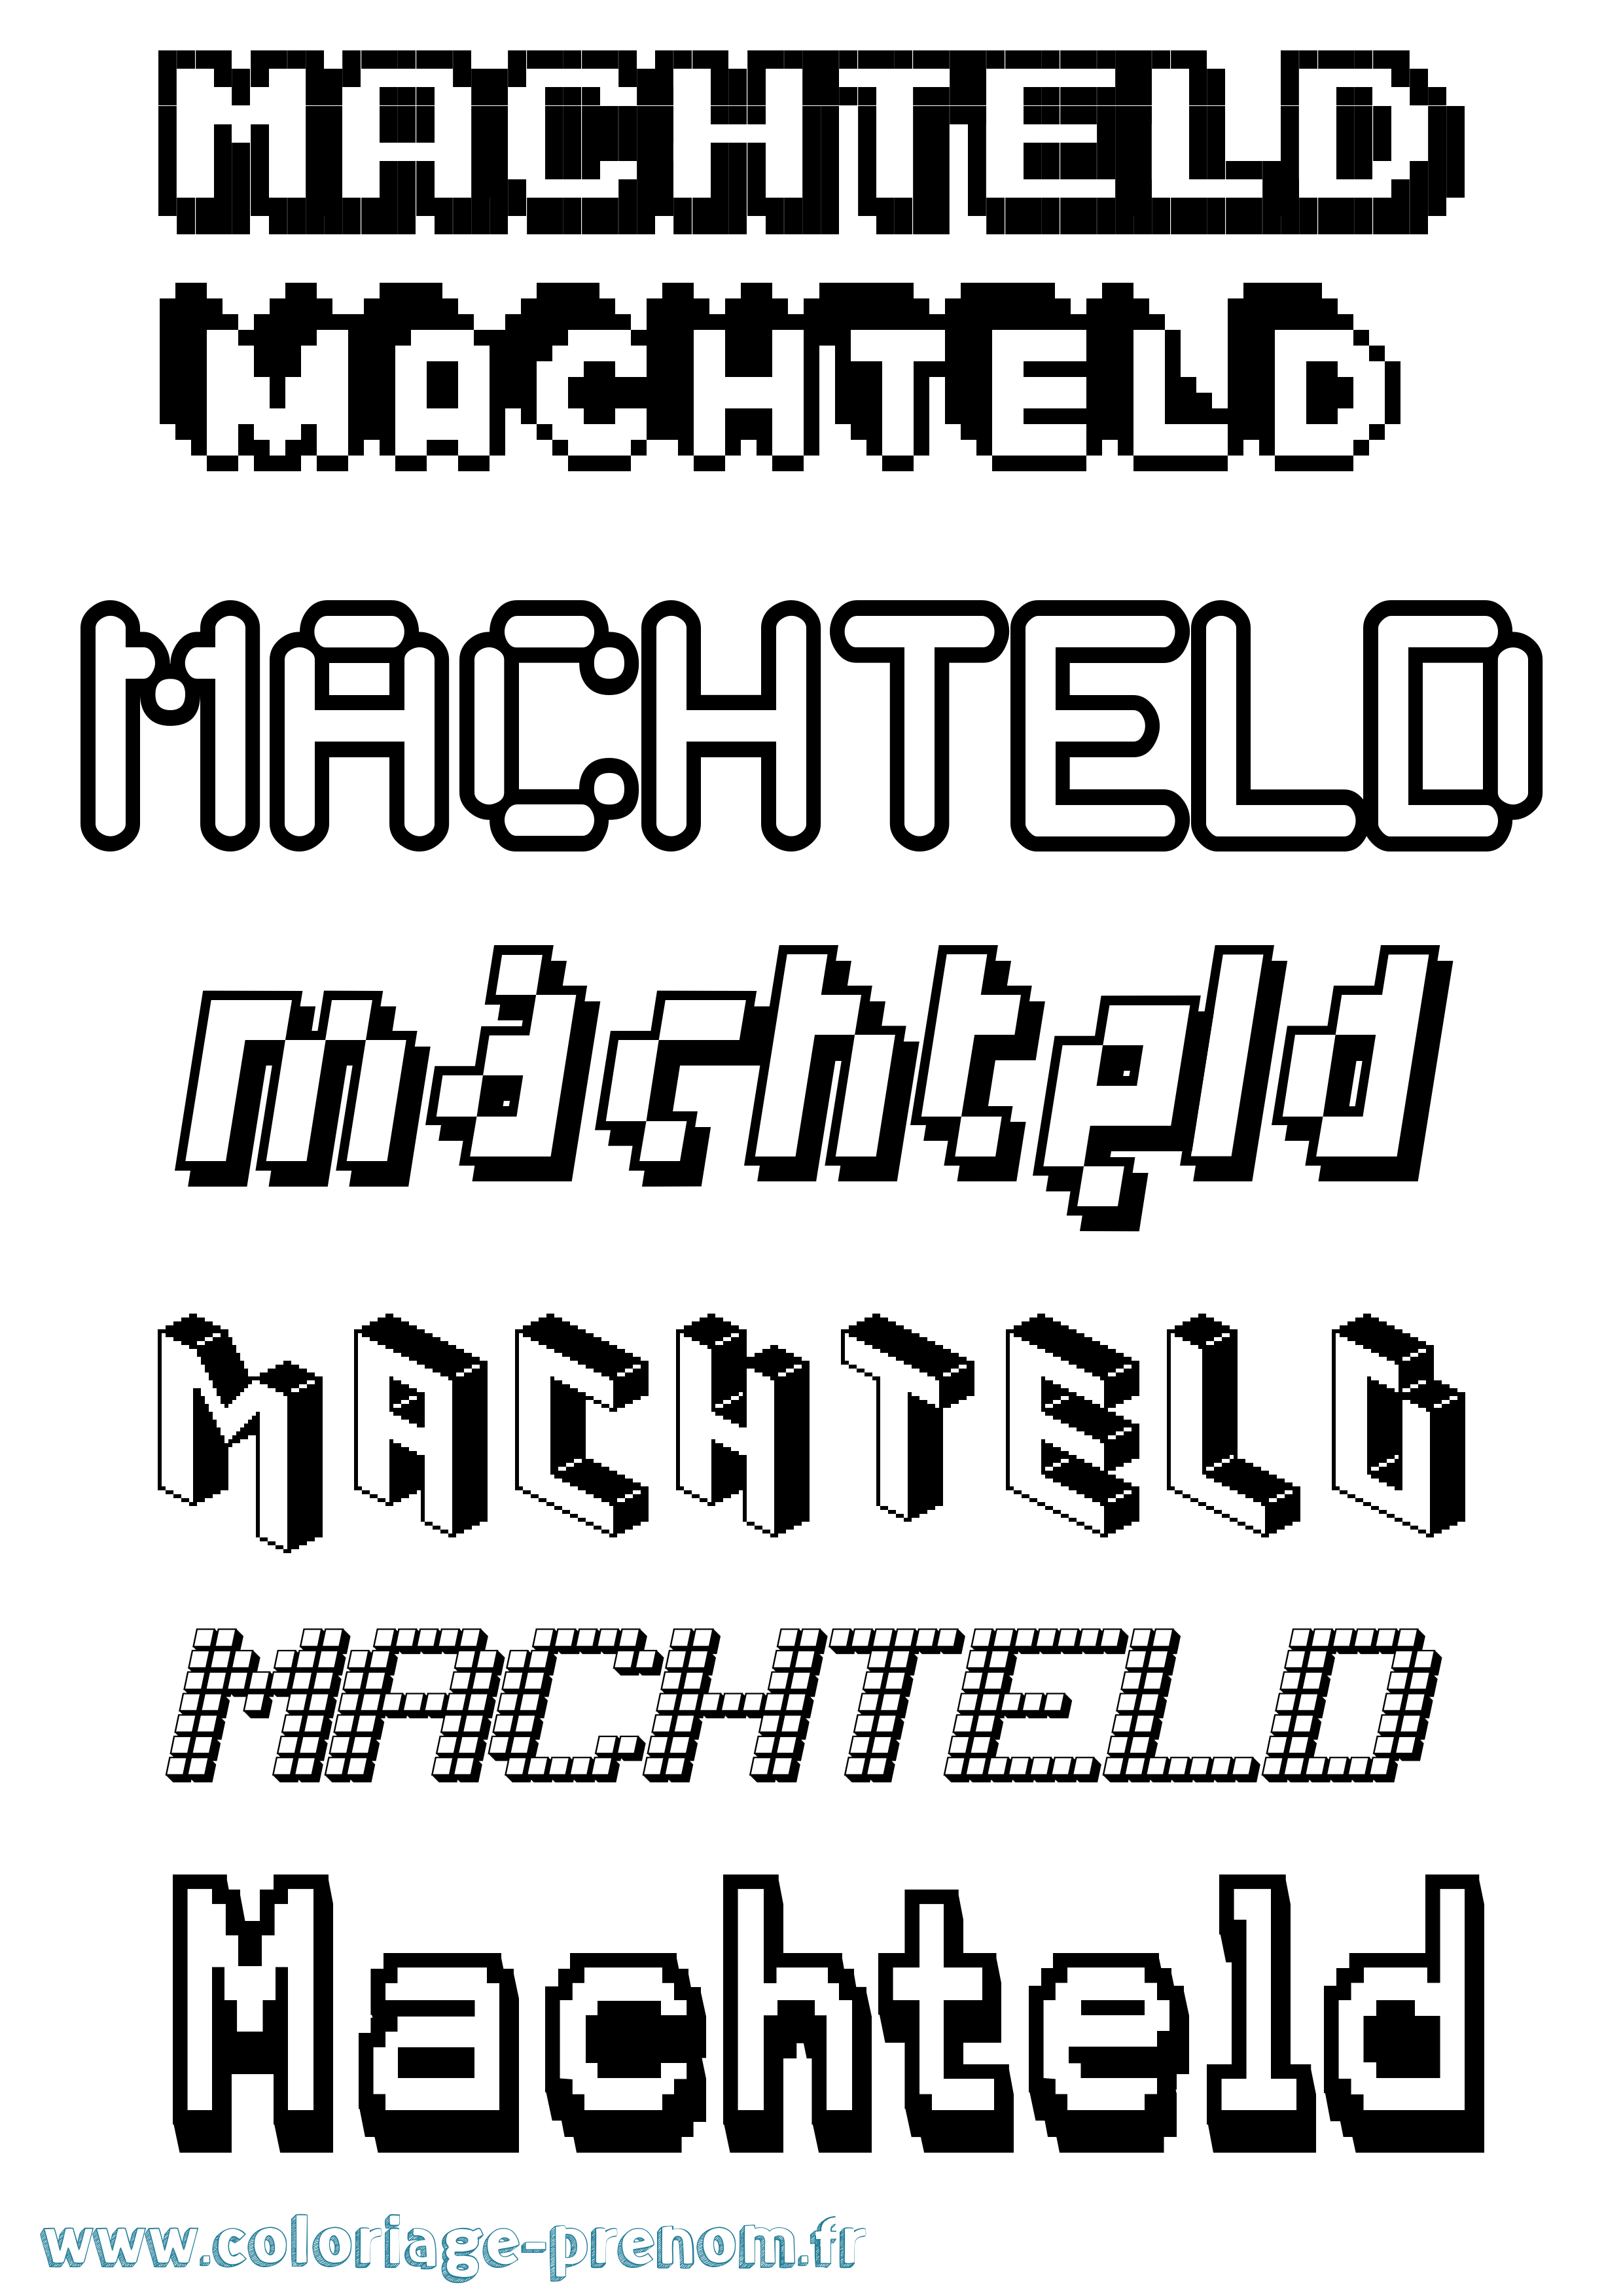 Coloriage prénom Machteld Pixel